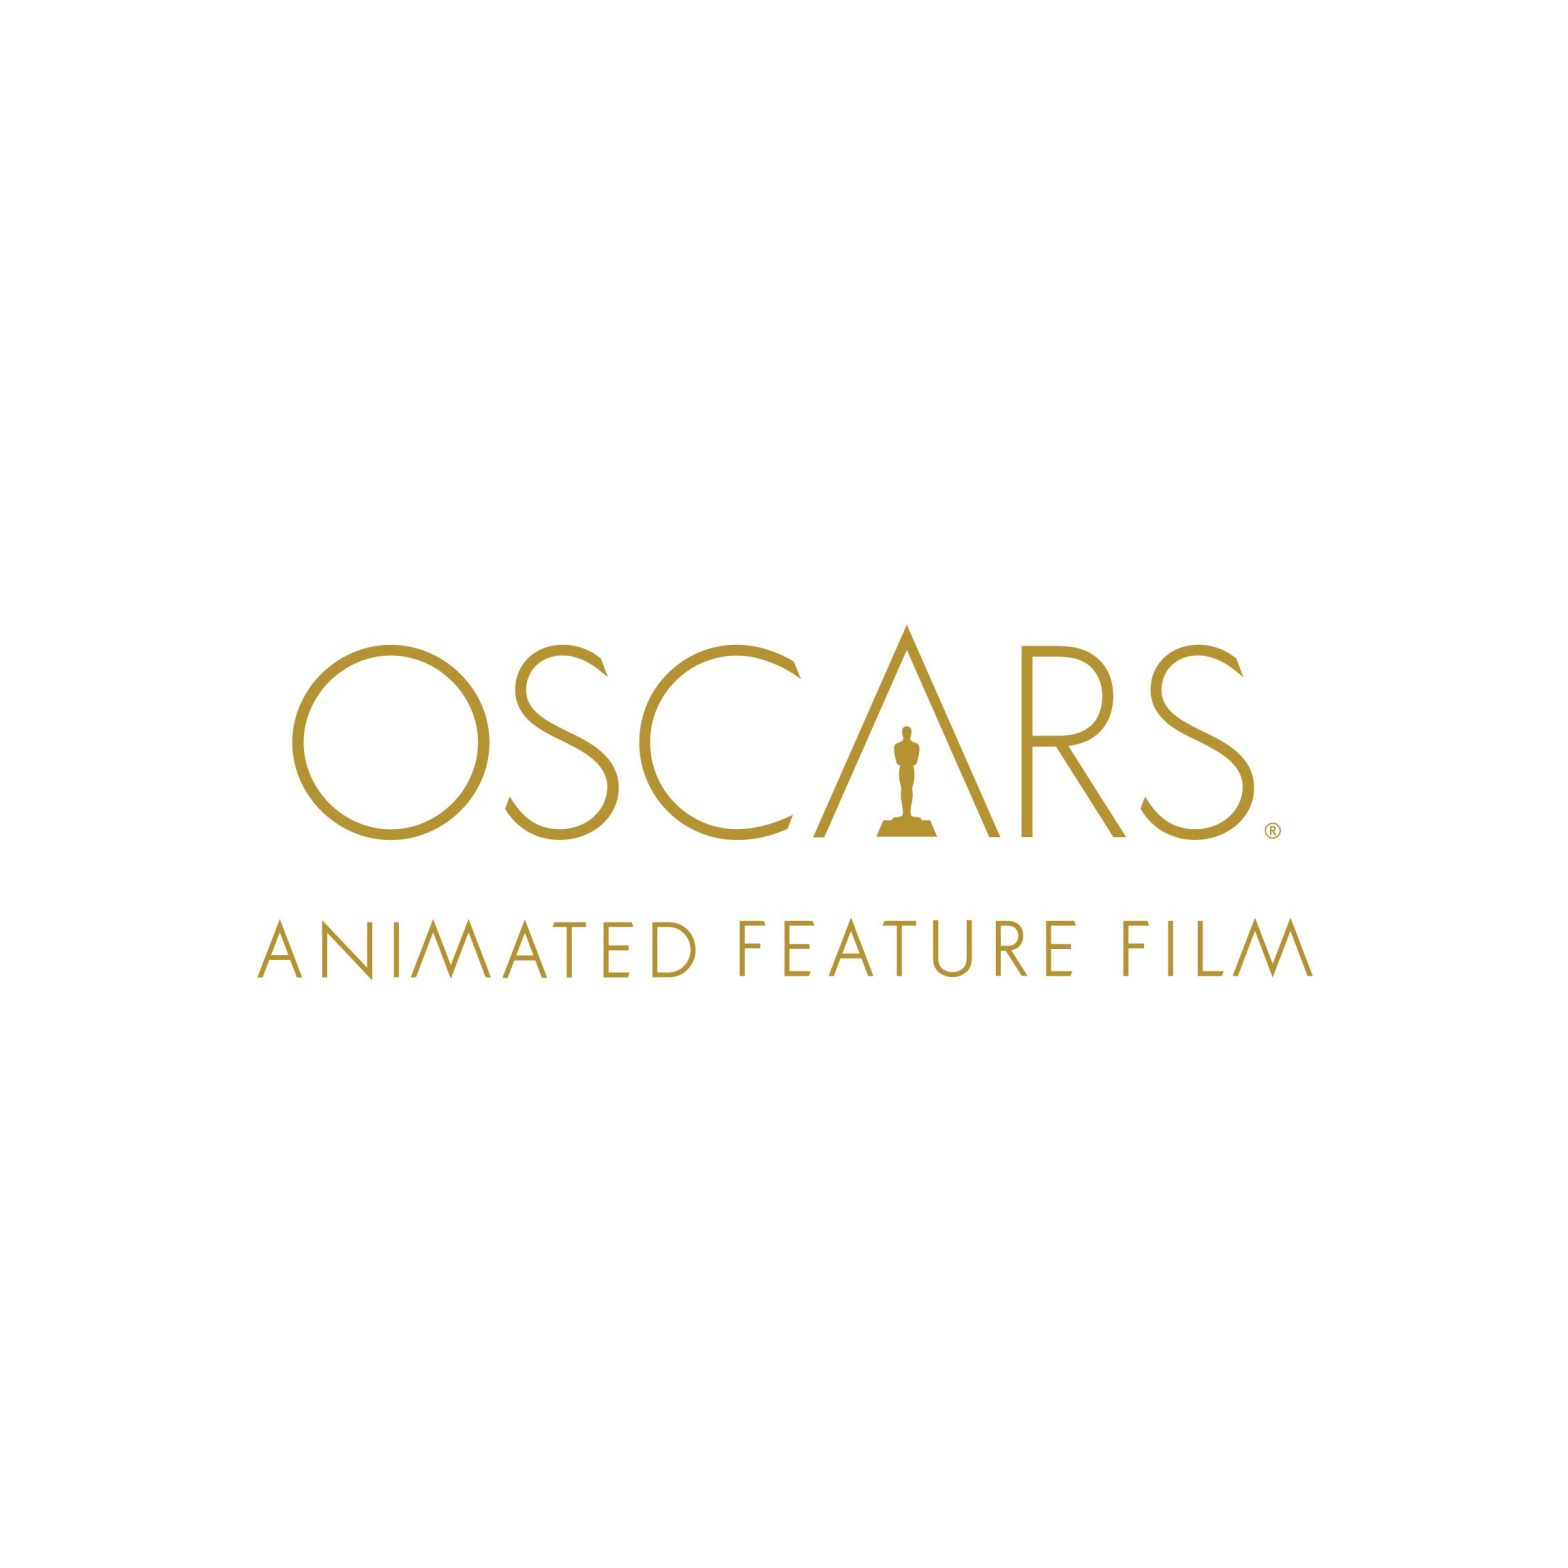 Oscars Animated feature film